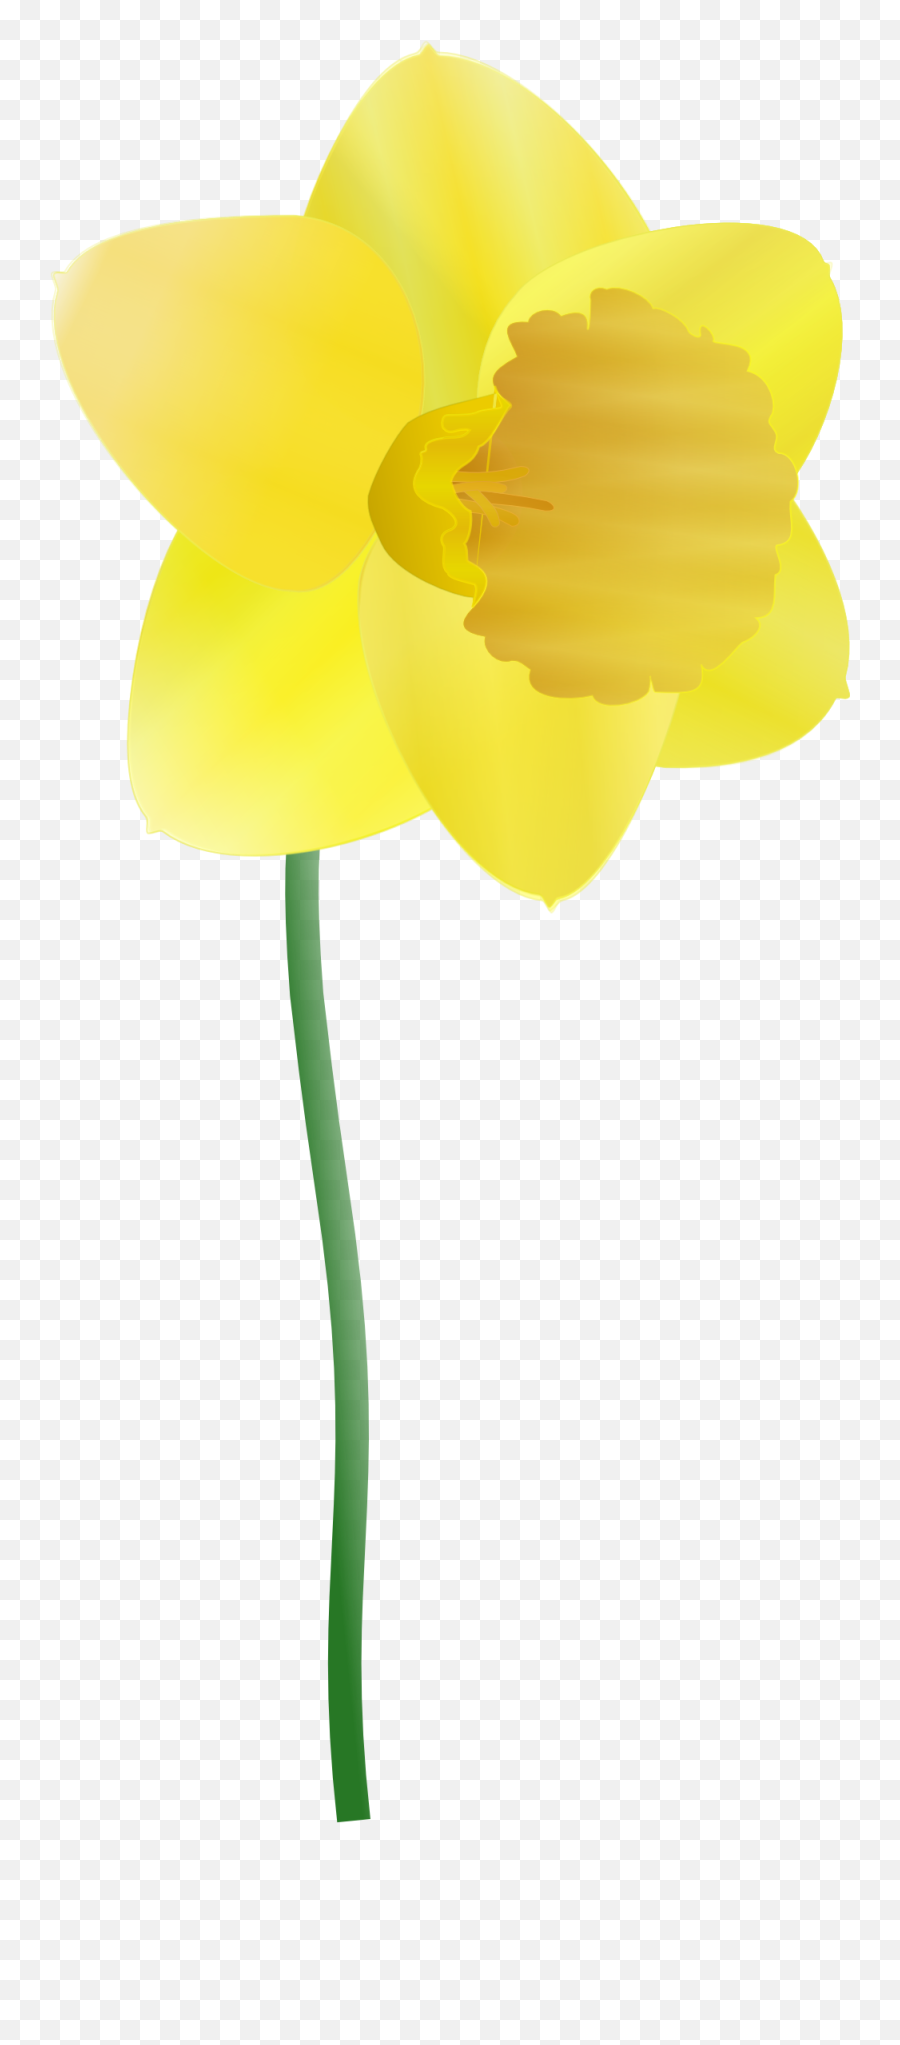 Daffodil Png Clip Arts For Web - Cartoon Daffodils,Daffodil Png